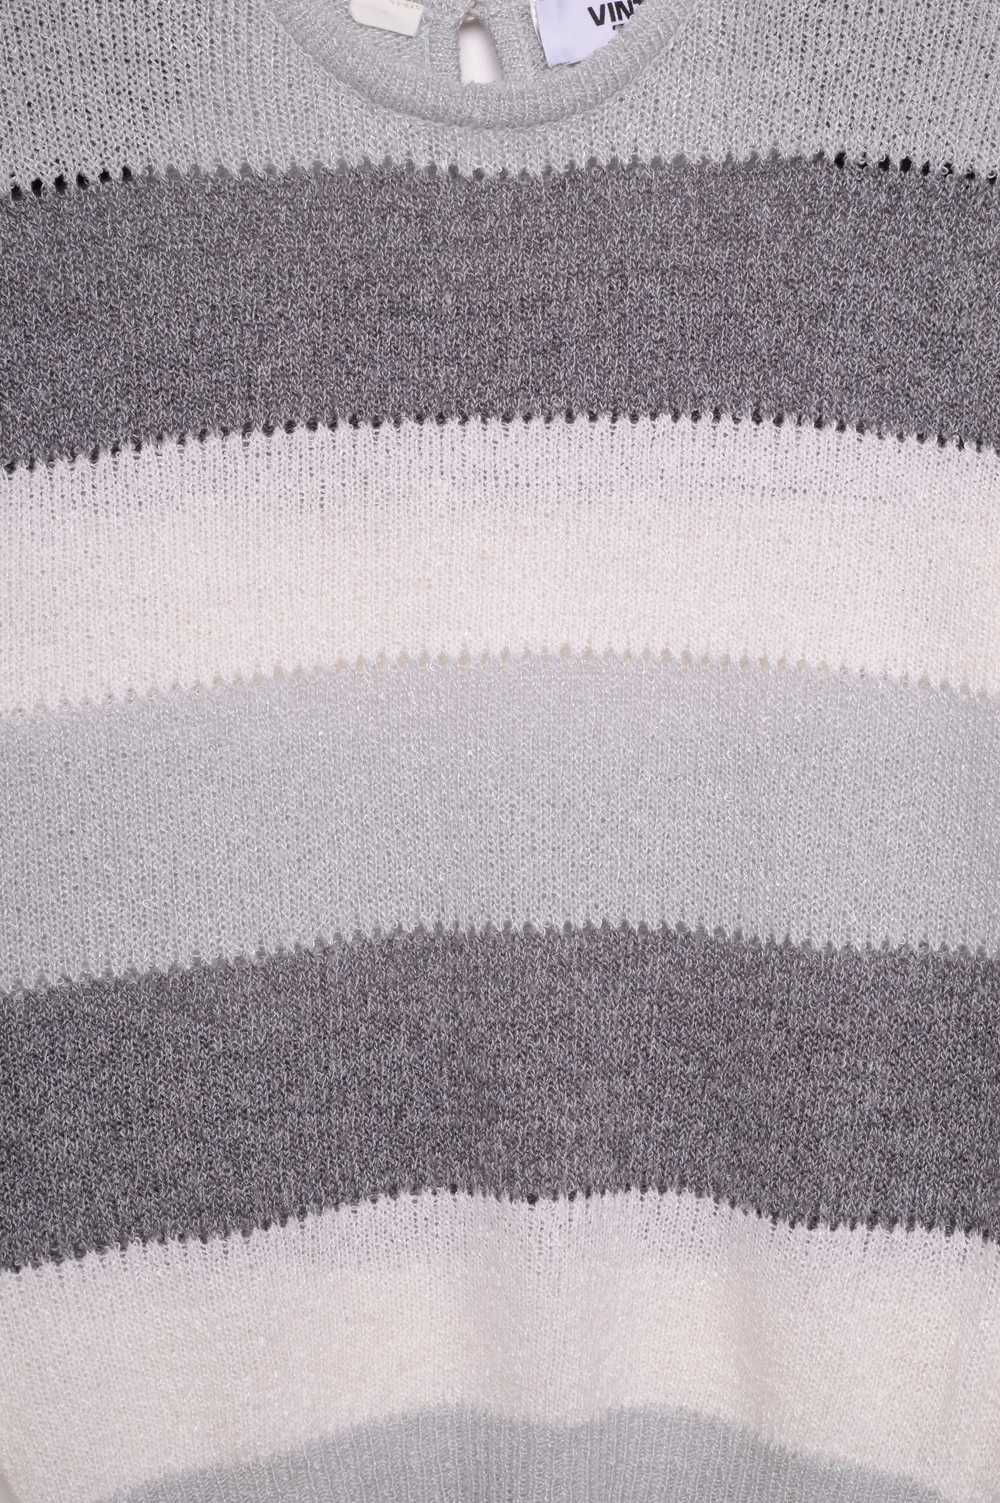 1980s Grayscale Stripe Sweater - image 3